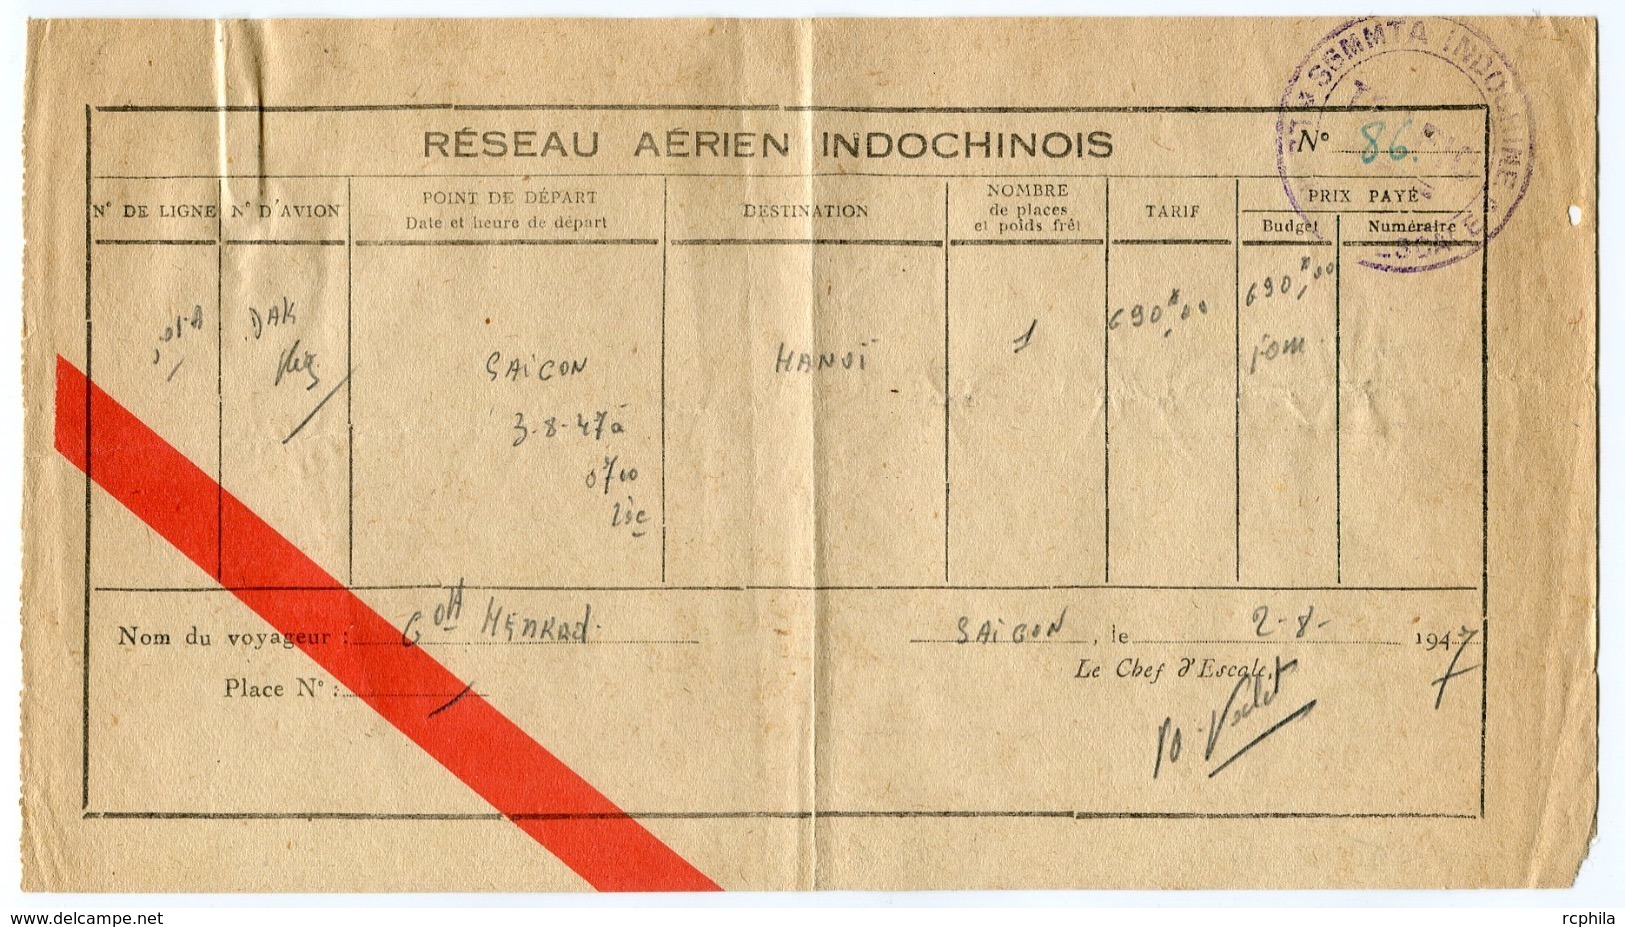 RC 14595 INDOCHINE 1947 BILLET D'AVION RESEAU AÉRIEN INDOCHINOIS SAIGON À HANOI TB - Europe